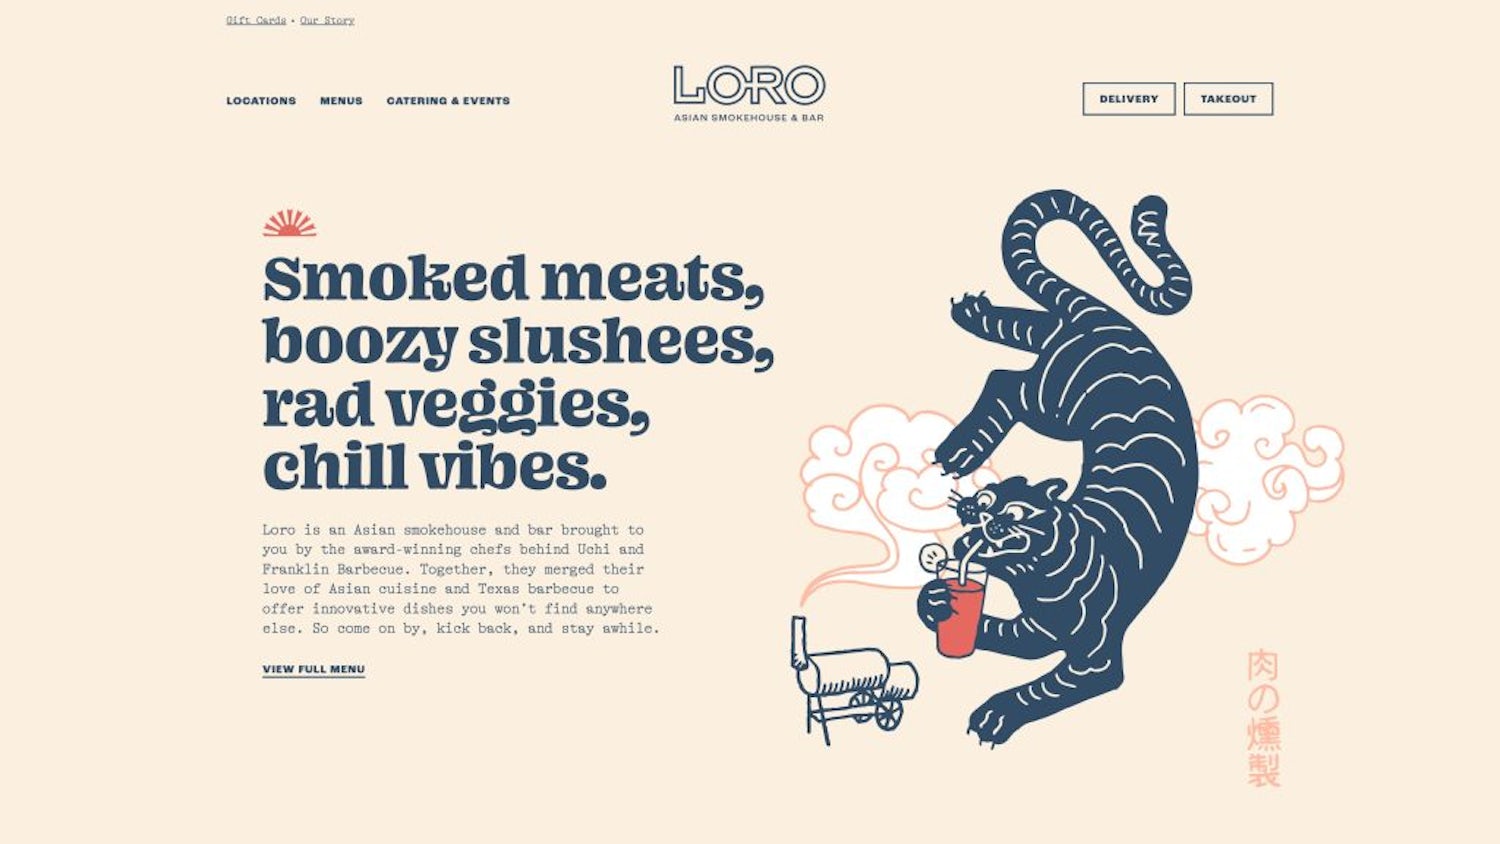 The Loro homepage